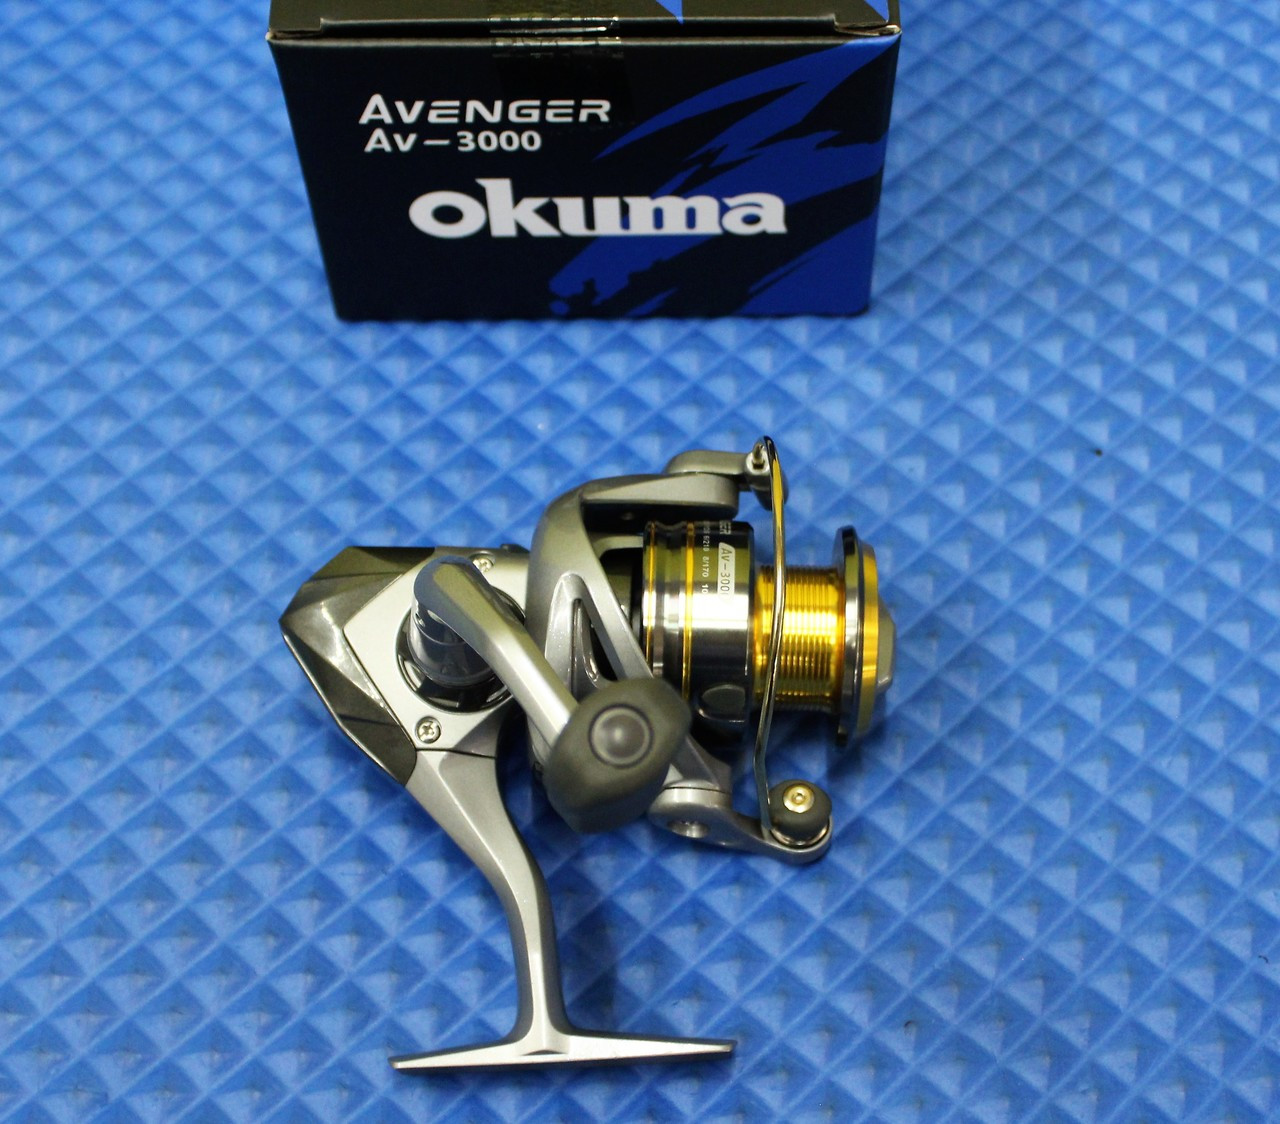 Okuma Fishing Tackle AV-3000 739998923038 Okuma Fishing Tackle Avenger  Spinning Reel 3000 size AV-3000